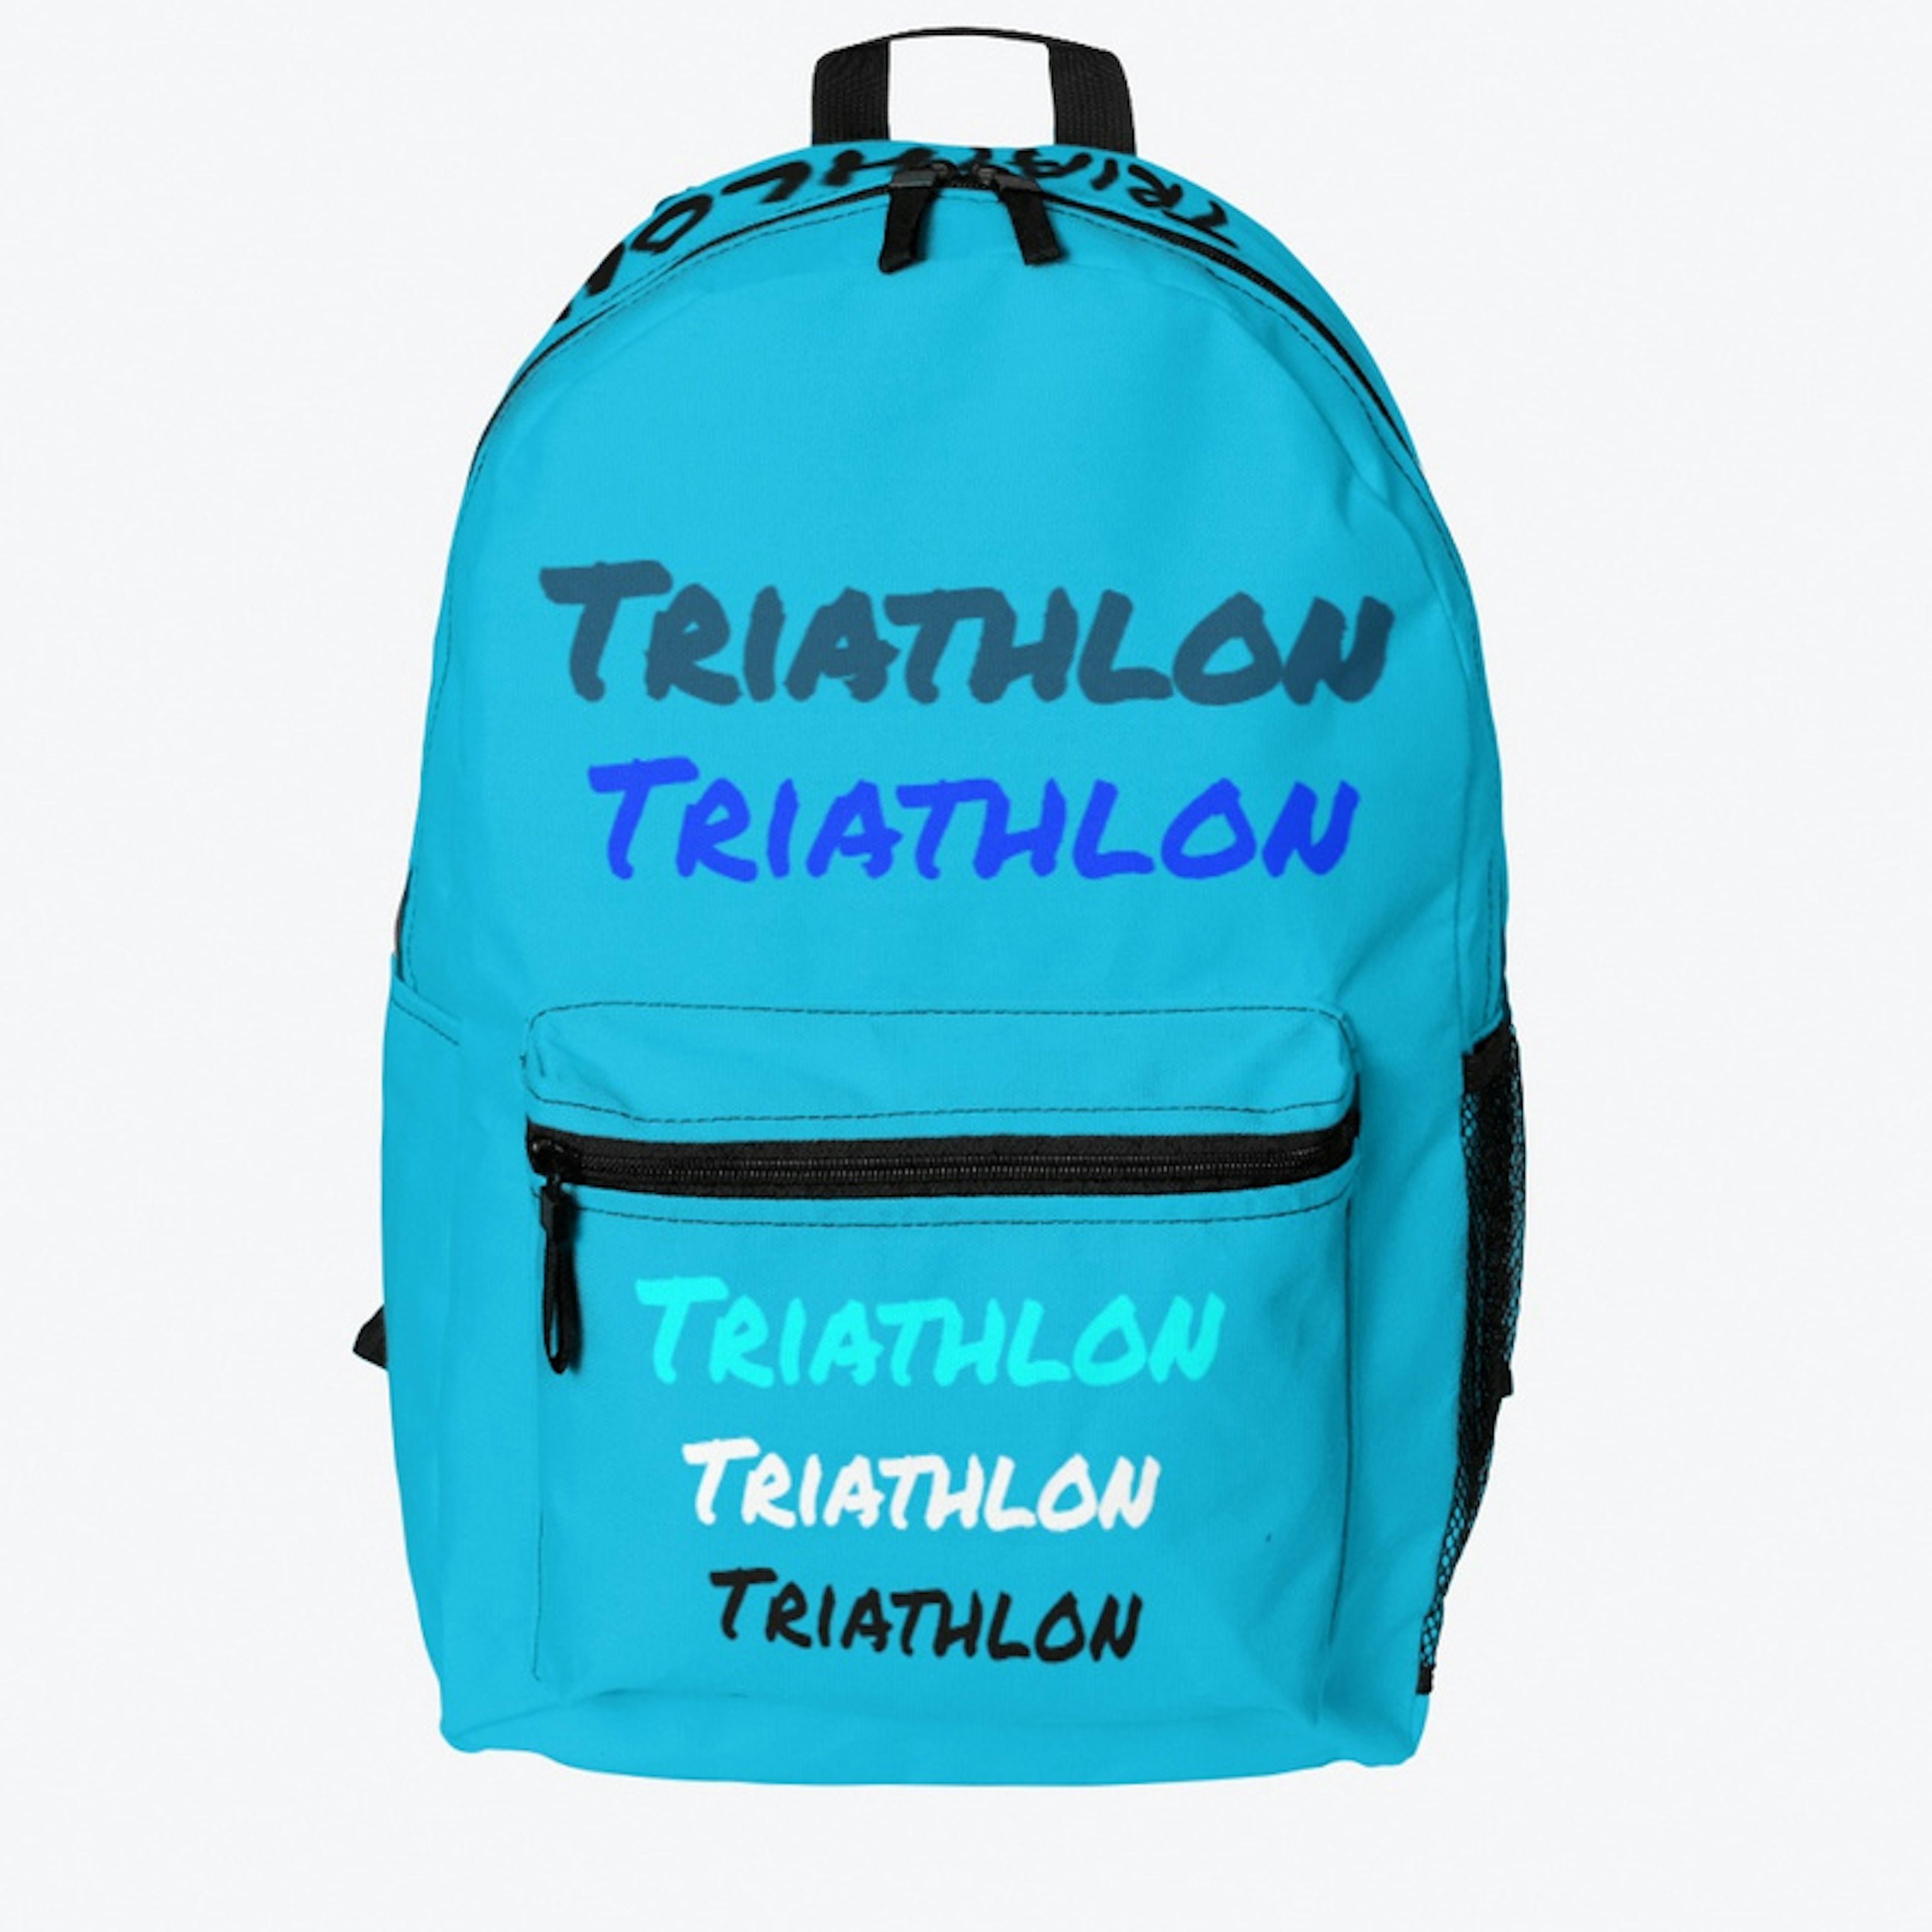 Triathlon infinity